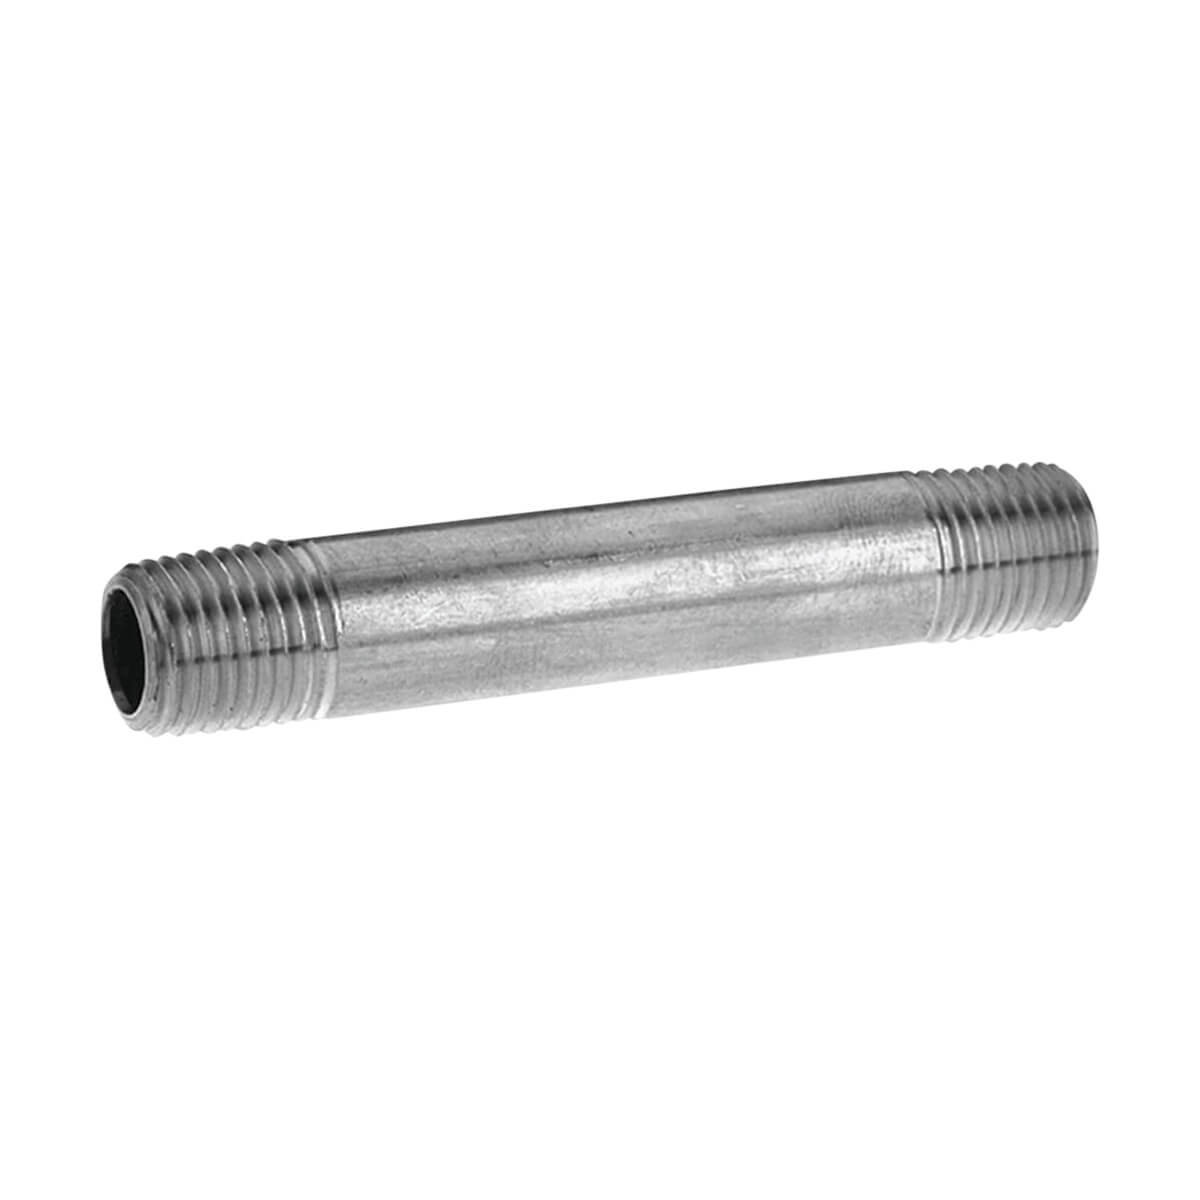 Pipe Nipple Galvanized Steel - 2-in x 4-in